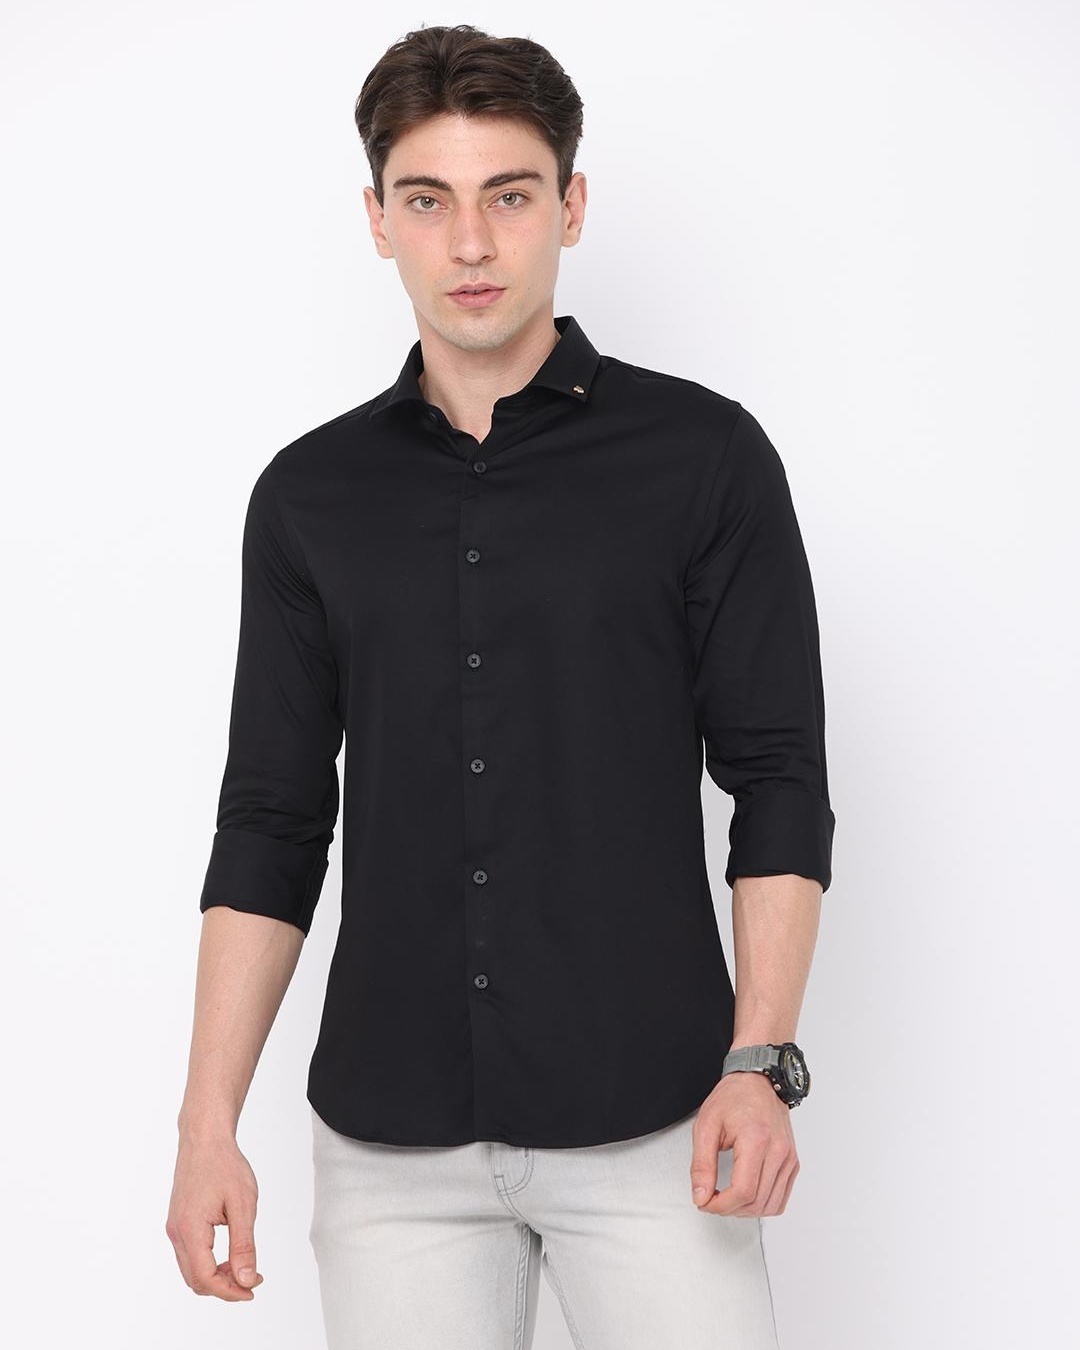 Buy Fly69 Men's Black Slim Fit Shirt for Men Online at Bewakoof